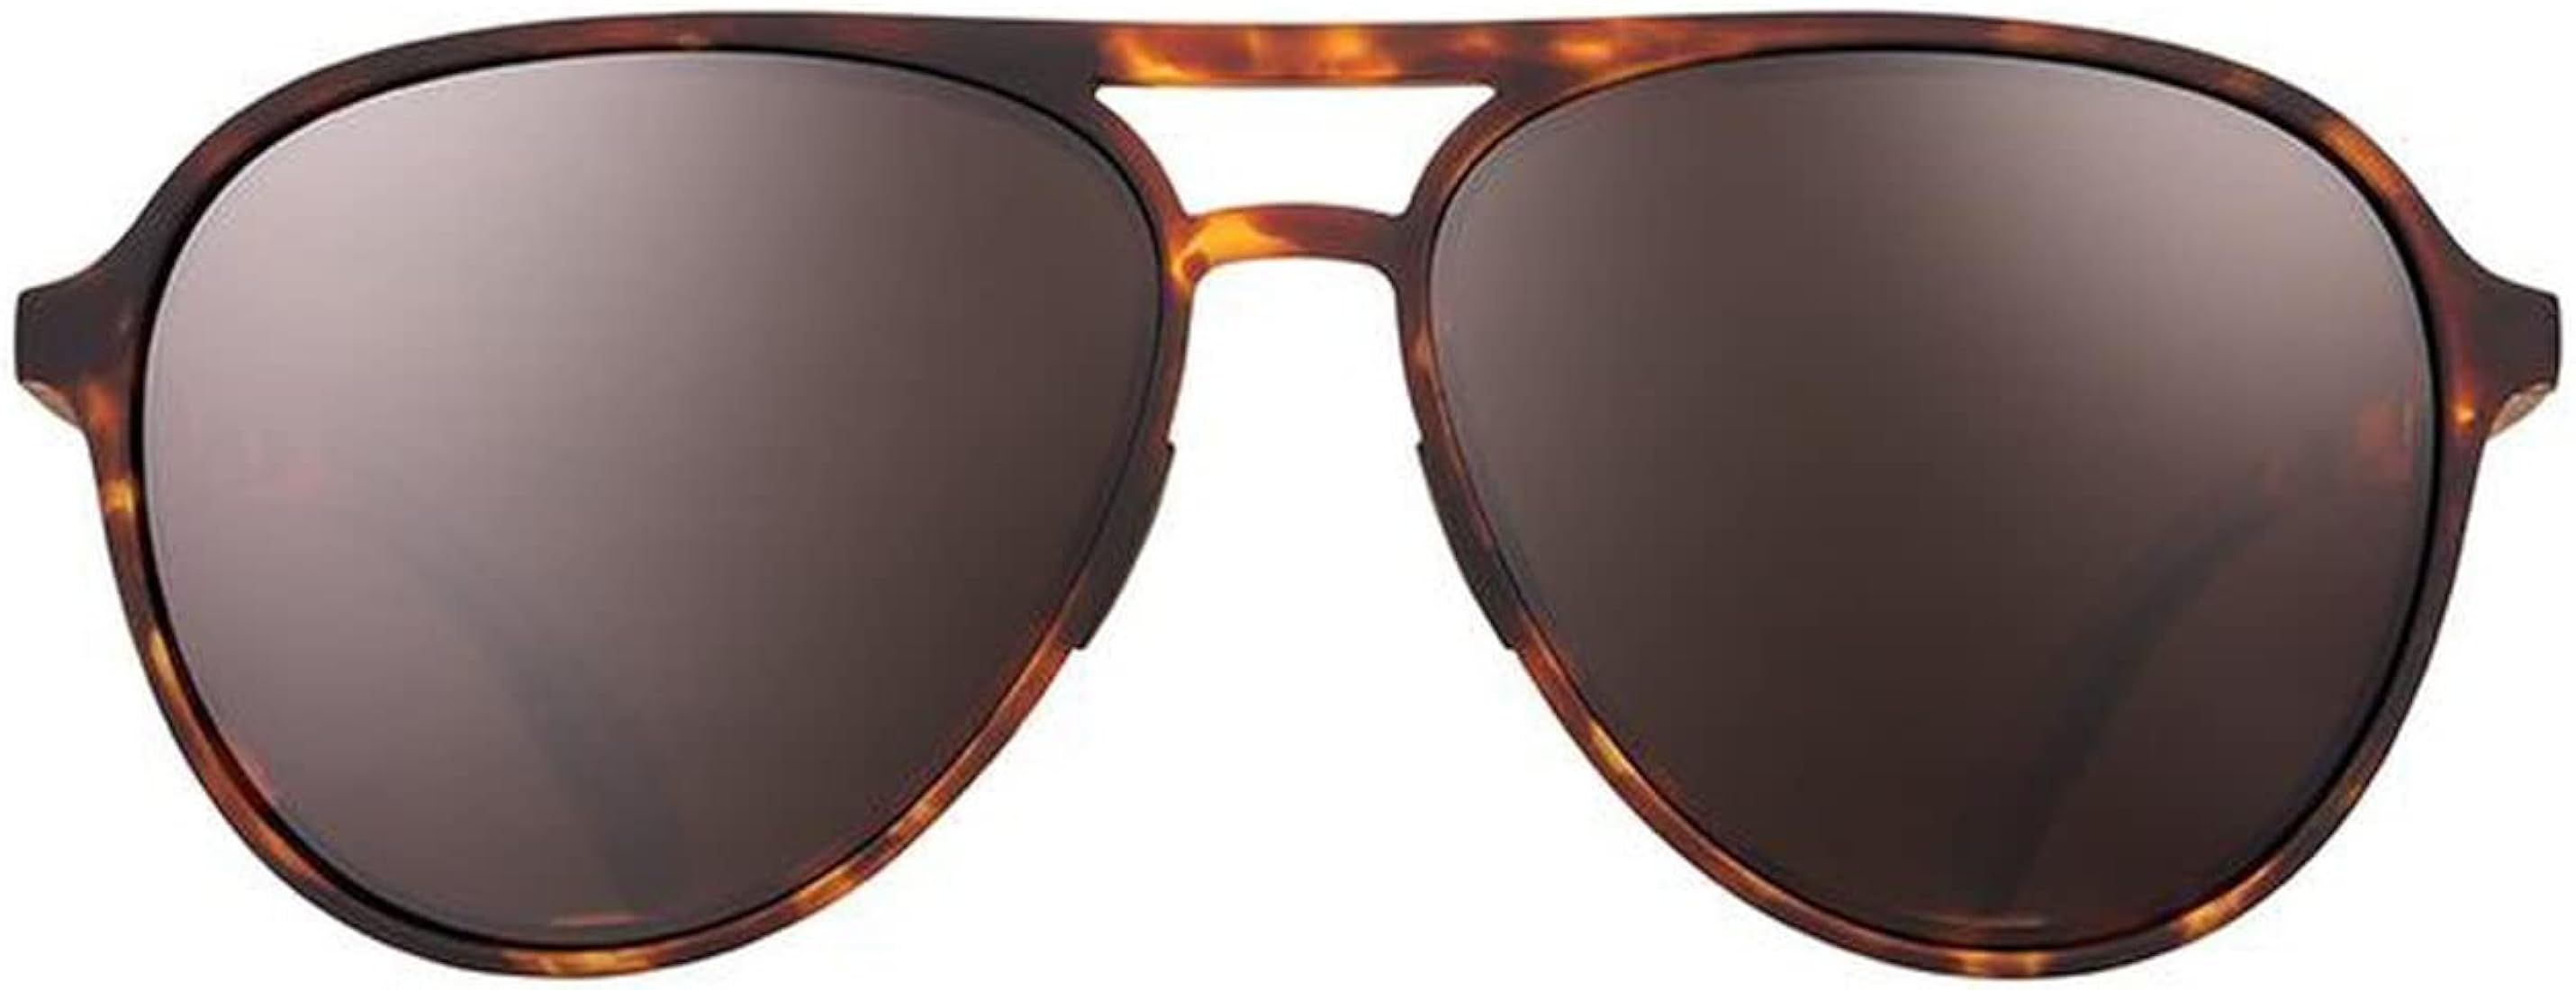 Goodr Mach GS Sunglasses | Amazon (US)